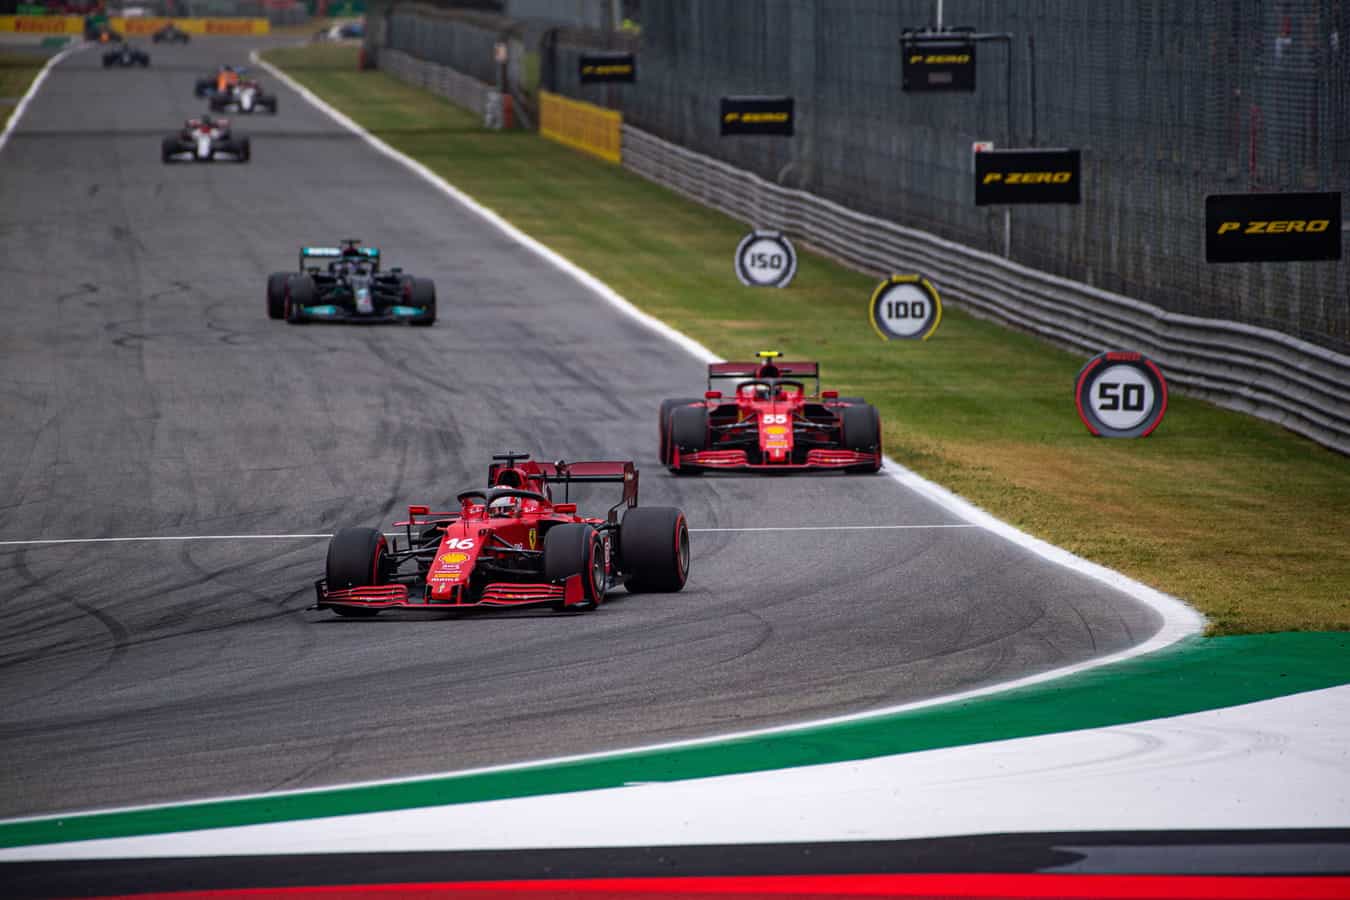 Both Ferrari cars in action at the 2021 Italian Grand Prix.